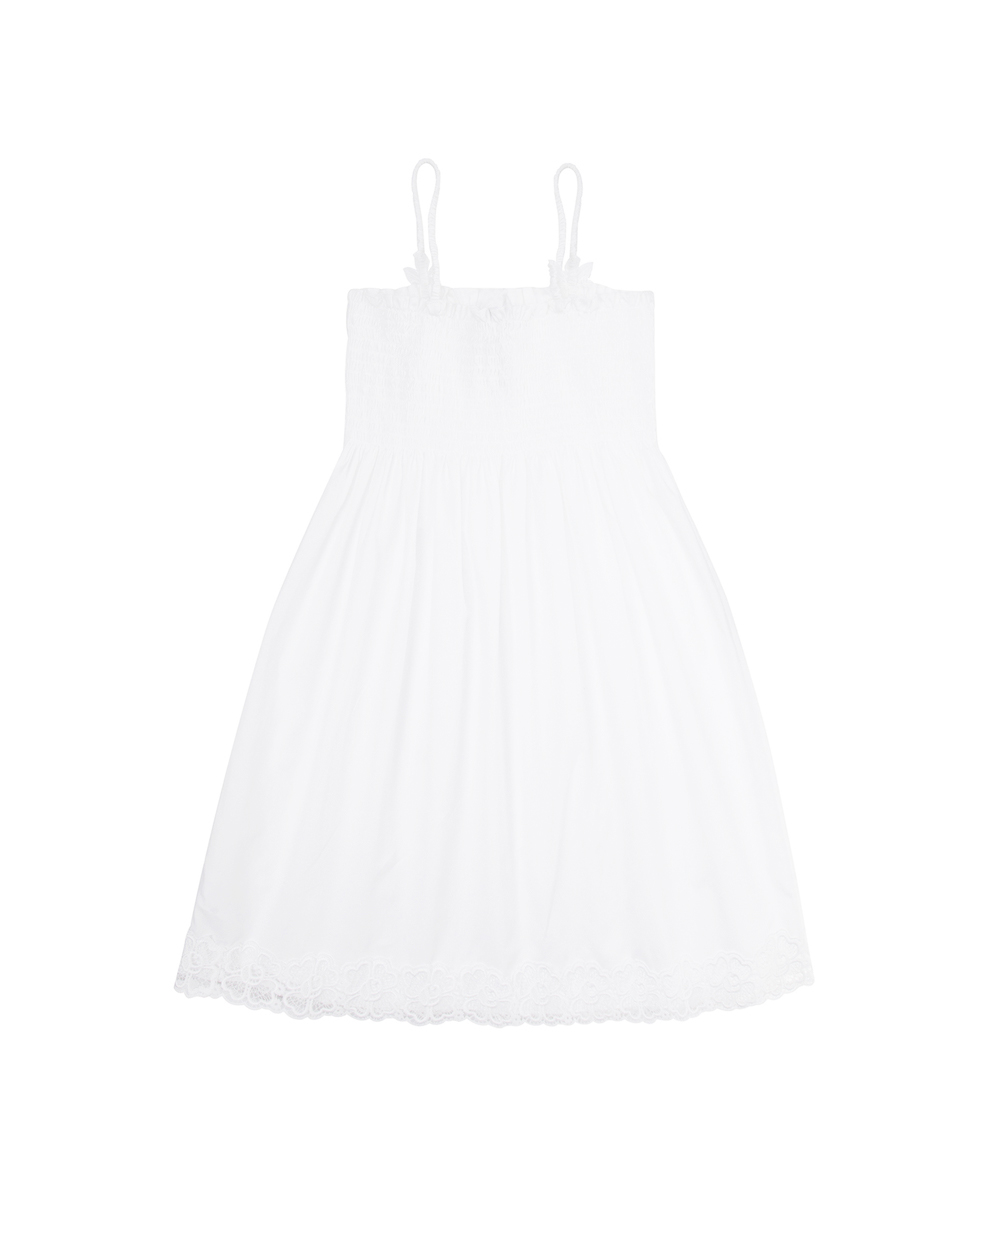 ABITO SENZA MANICHE Dolce&Gabbana Kids L5JD0G-G7RWC-B, белый цвет • Купить в интернет-магазине Kameron